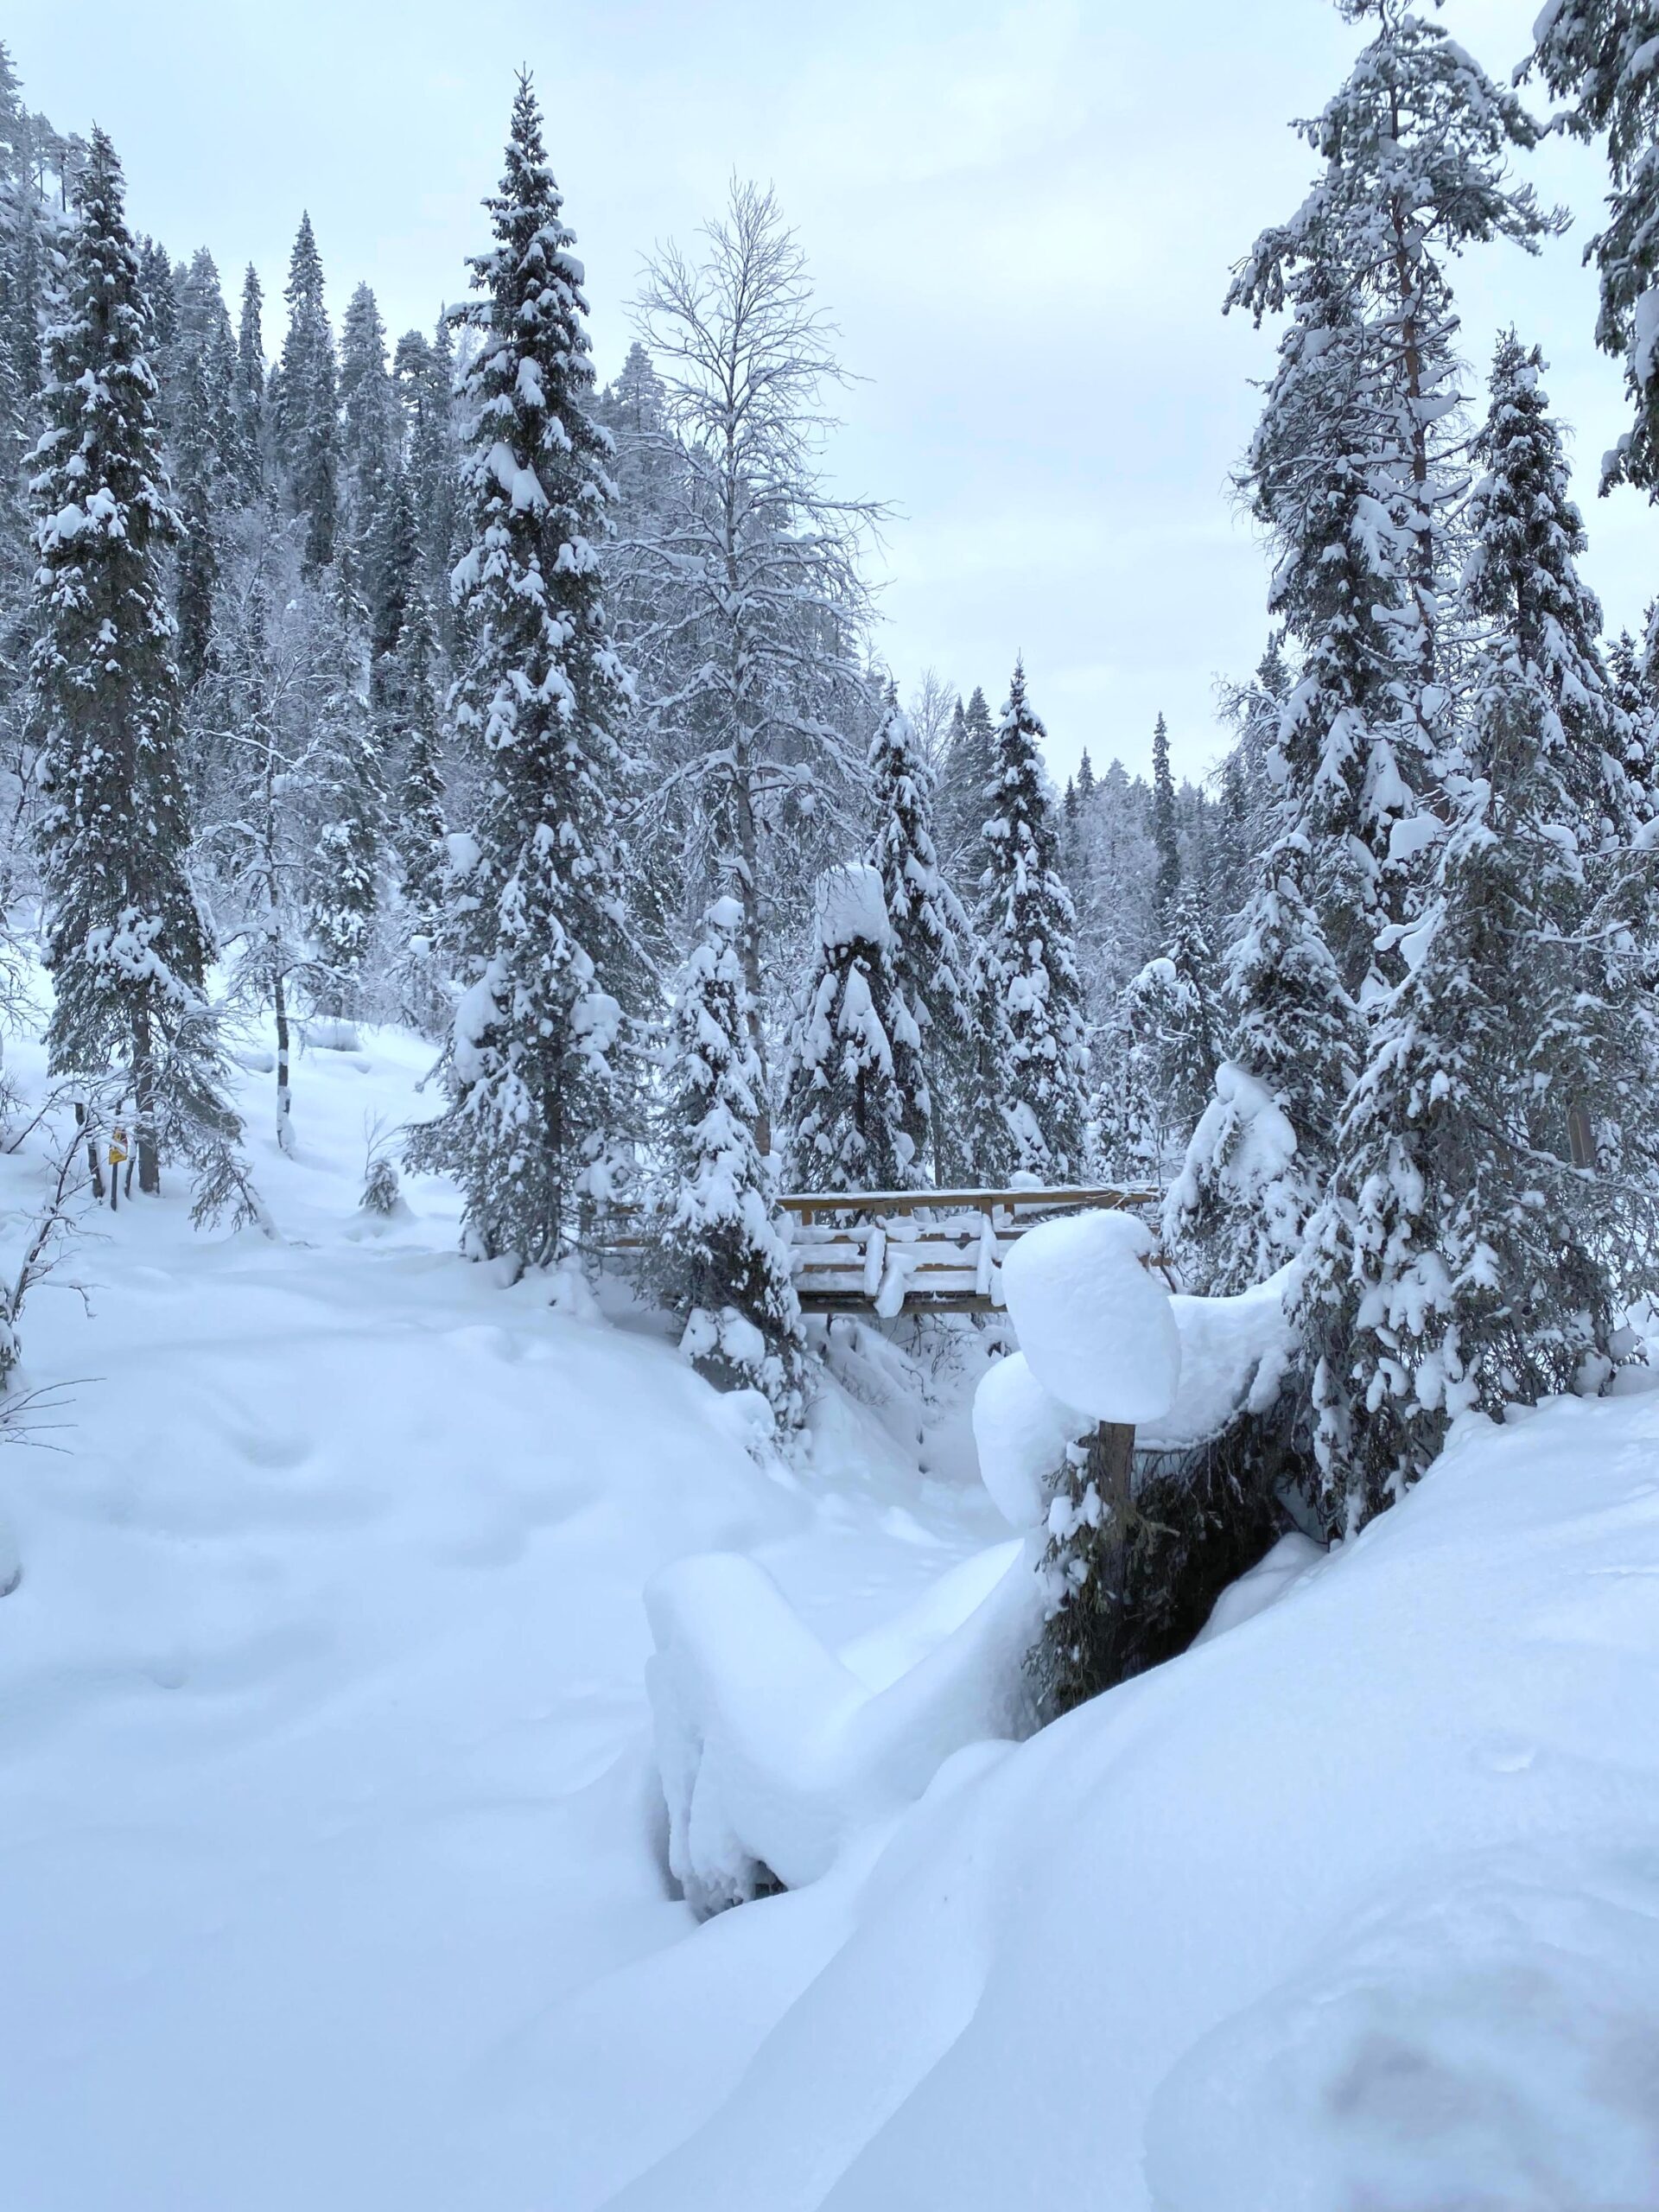 Snow blanket over the Korouoma canon, posio Lapland